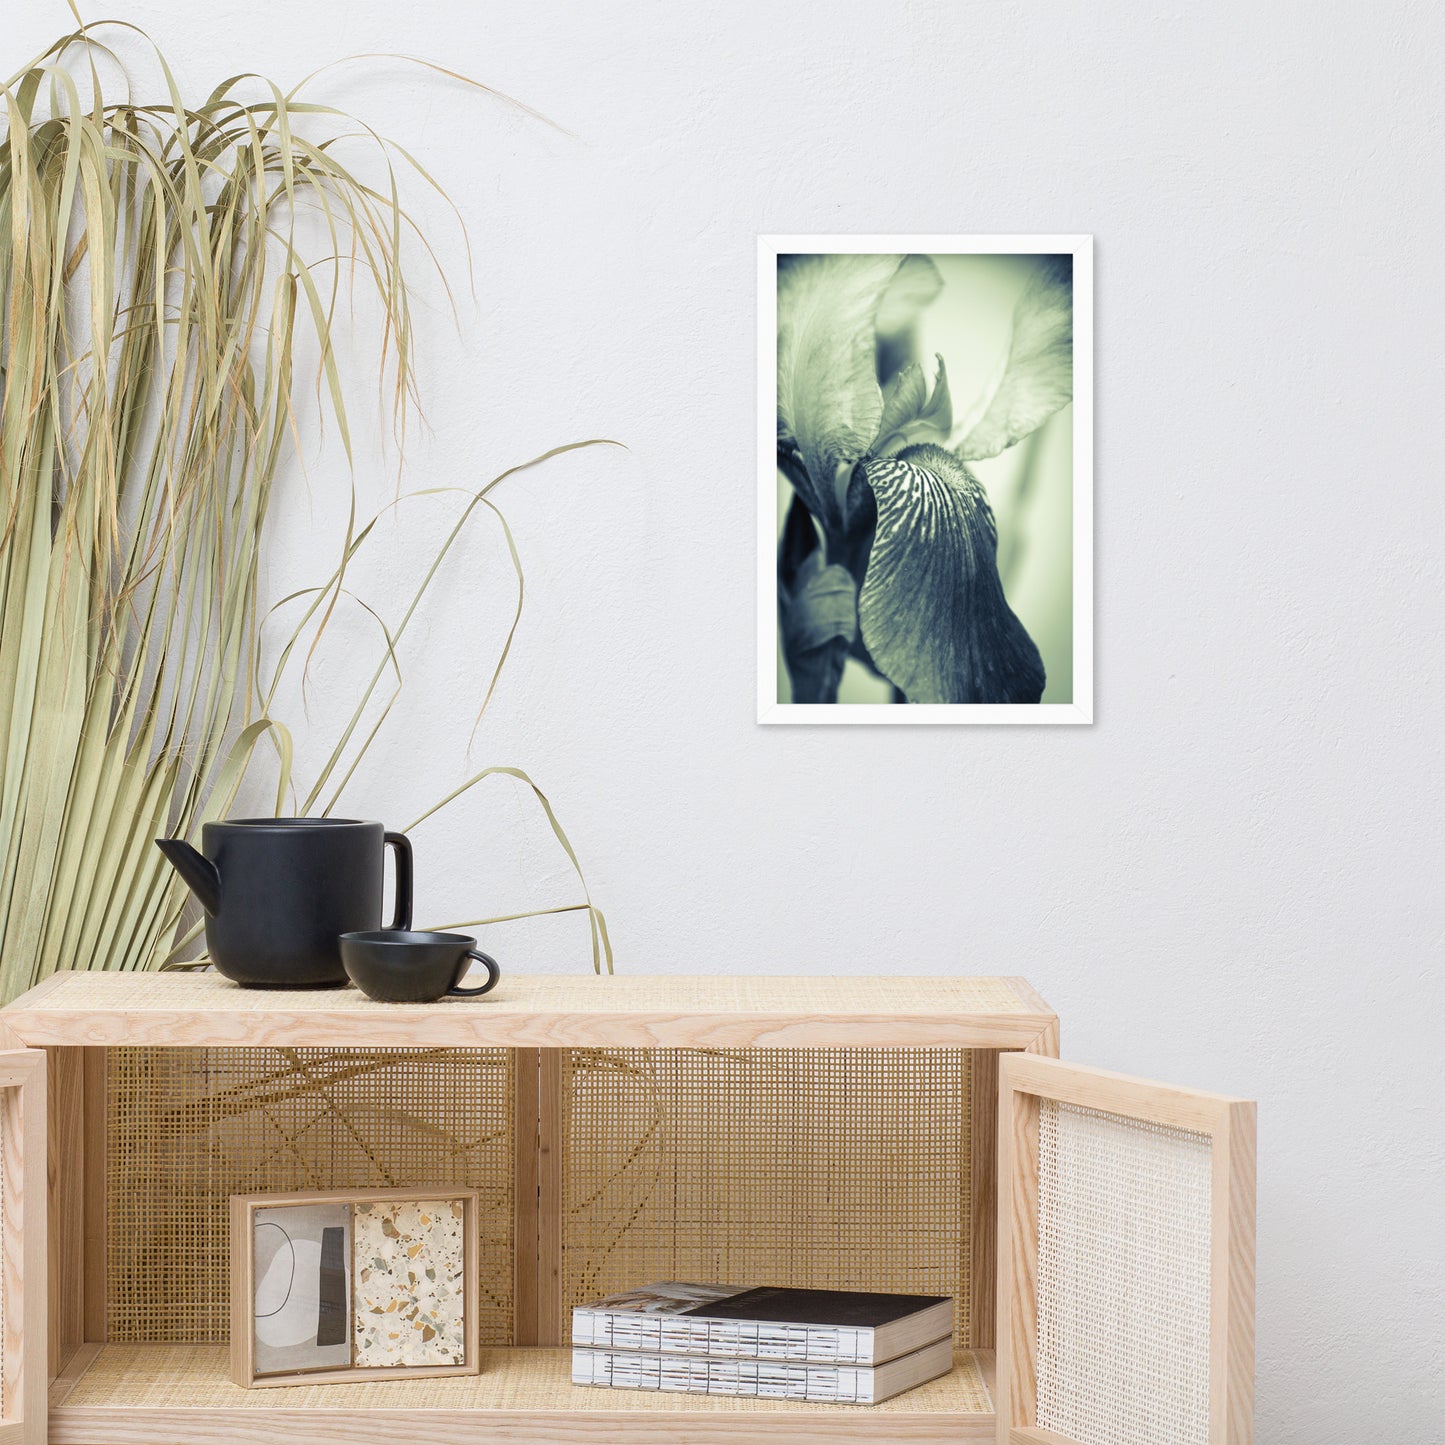 Dining Room Artwork Ideas: Abstract Japanese Iris Delight- Botanical / Floral / Flora / Flowers / Nature Photograph Framed Wall Art Print - Artwork - Wall Decor - Home Decor